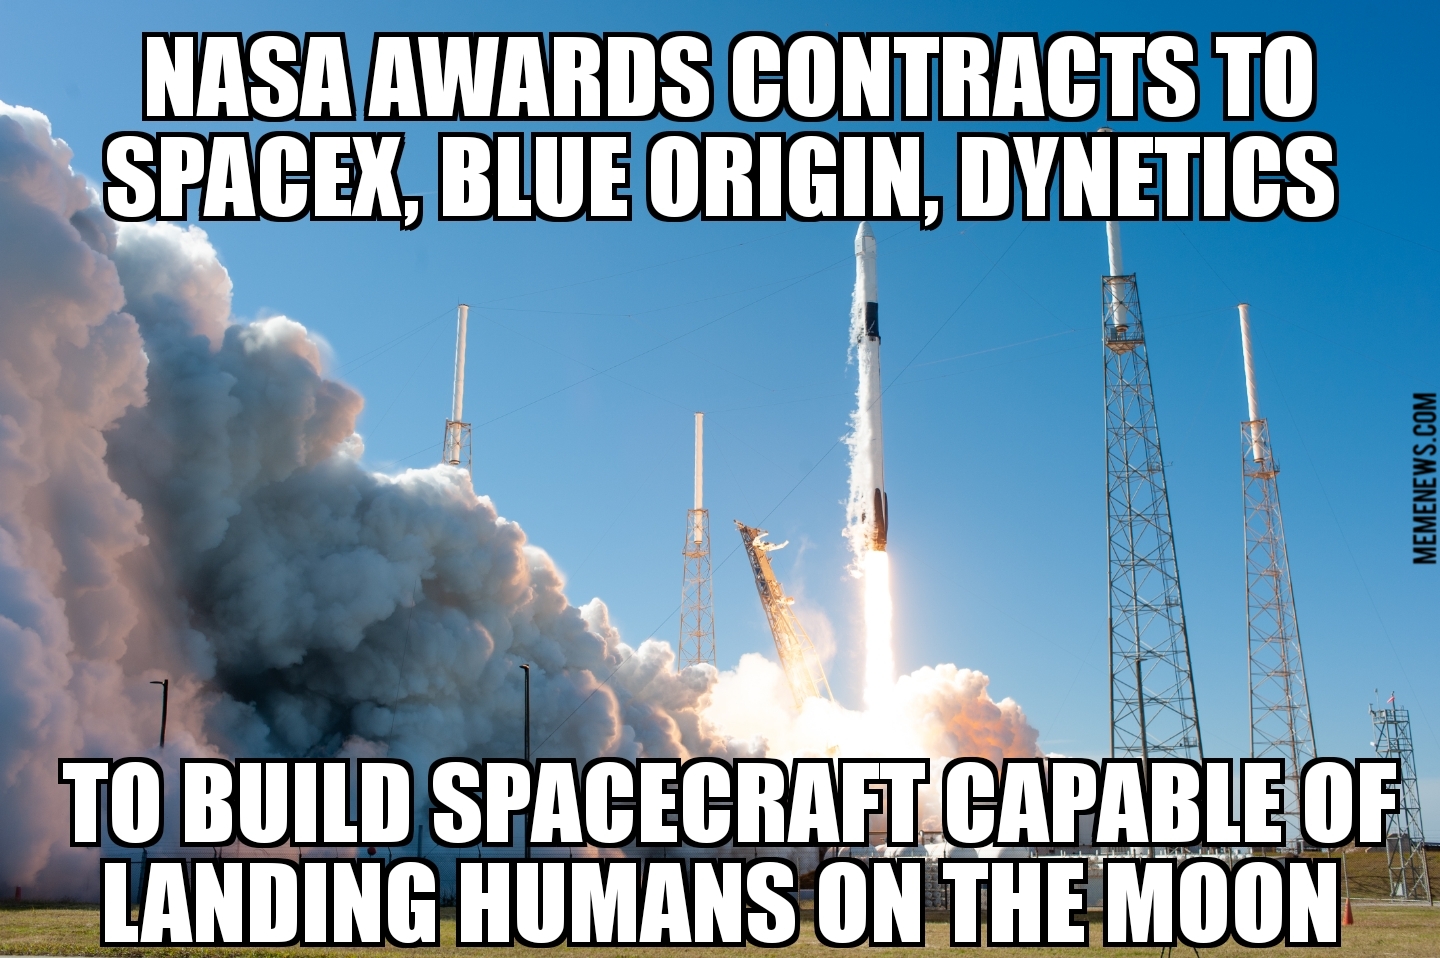 NASA awards moon mission contracts